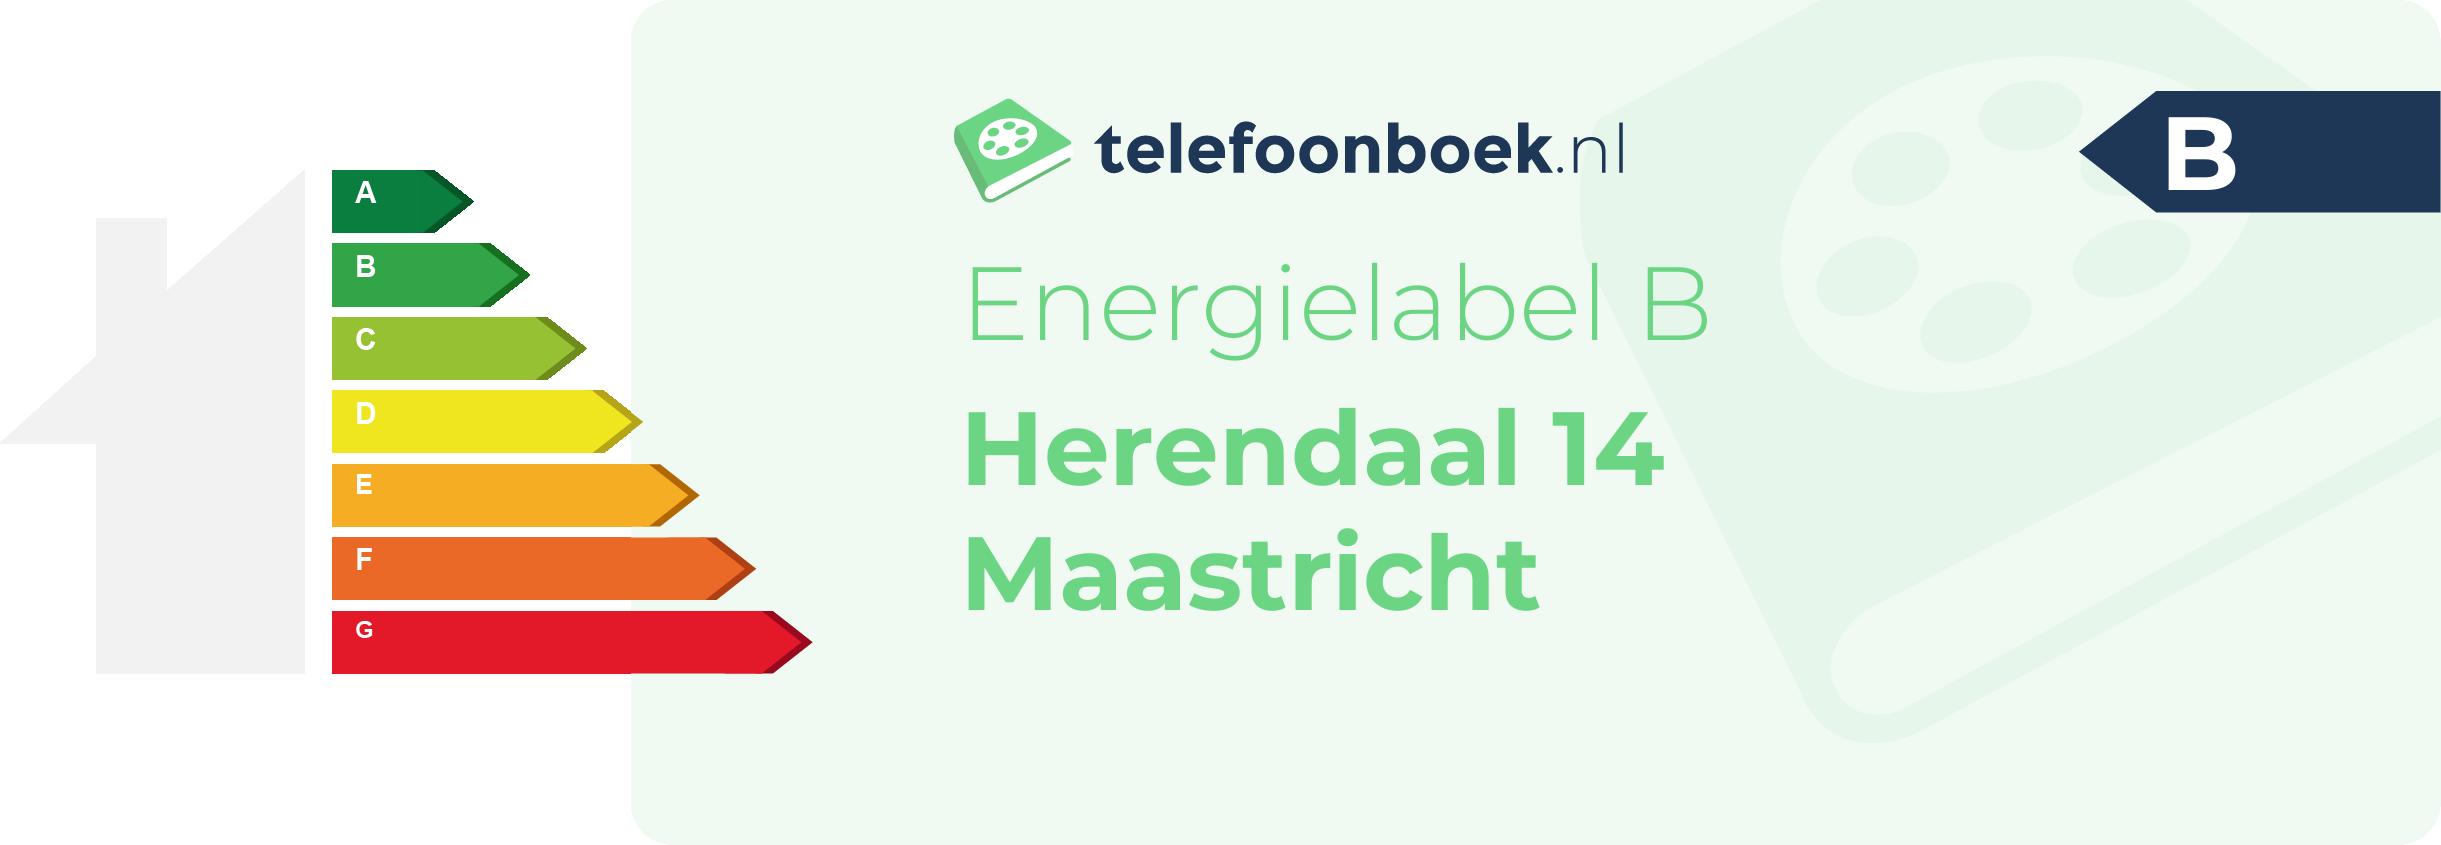 Energielabel Herendaal 14 Maastricht